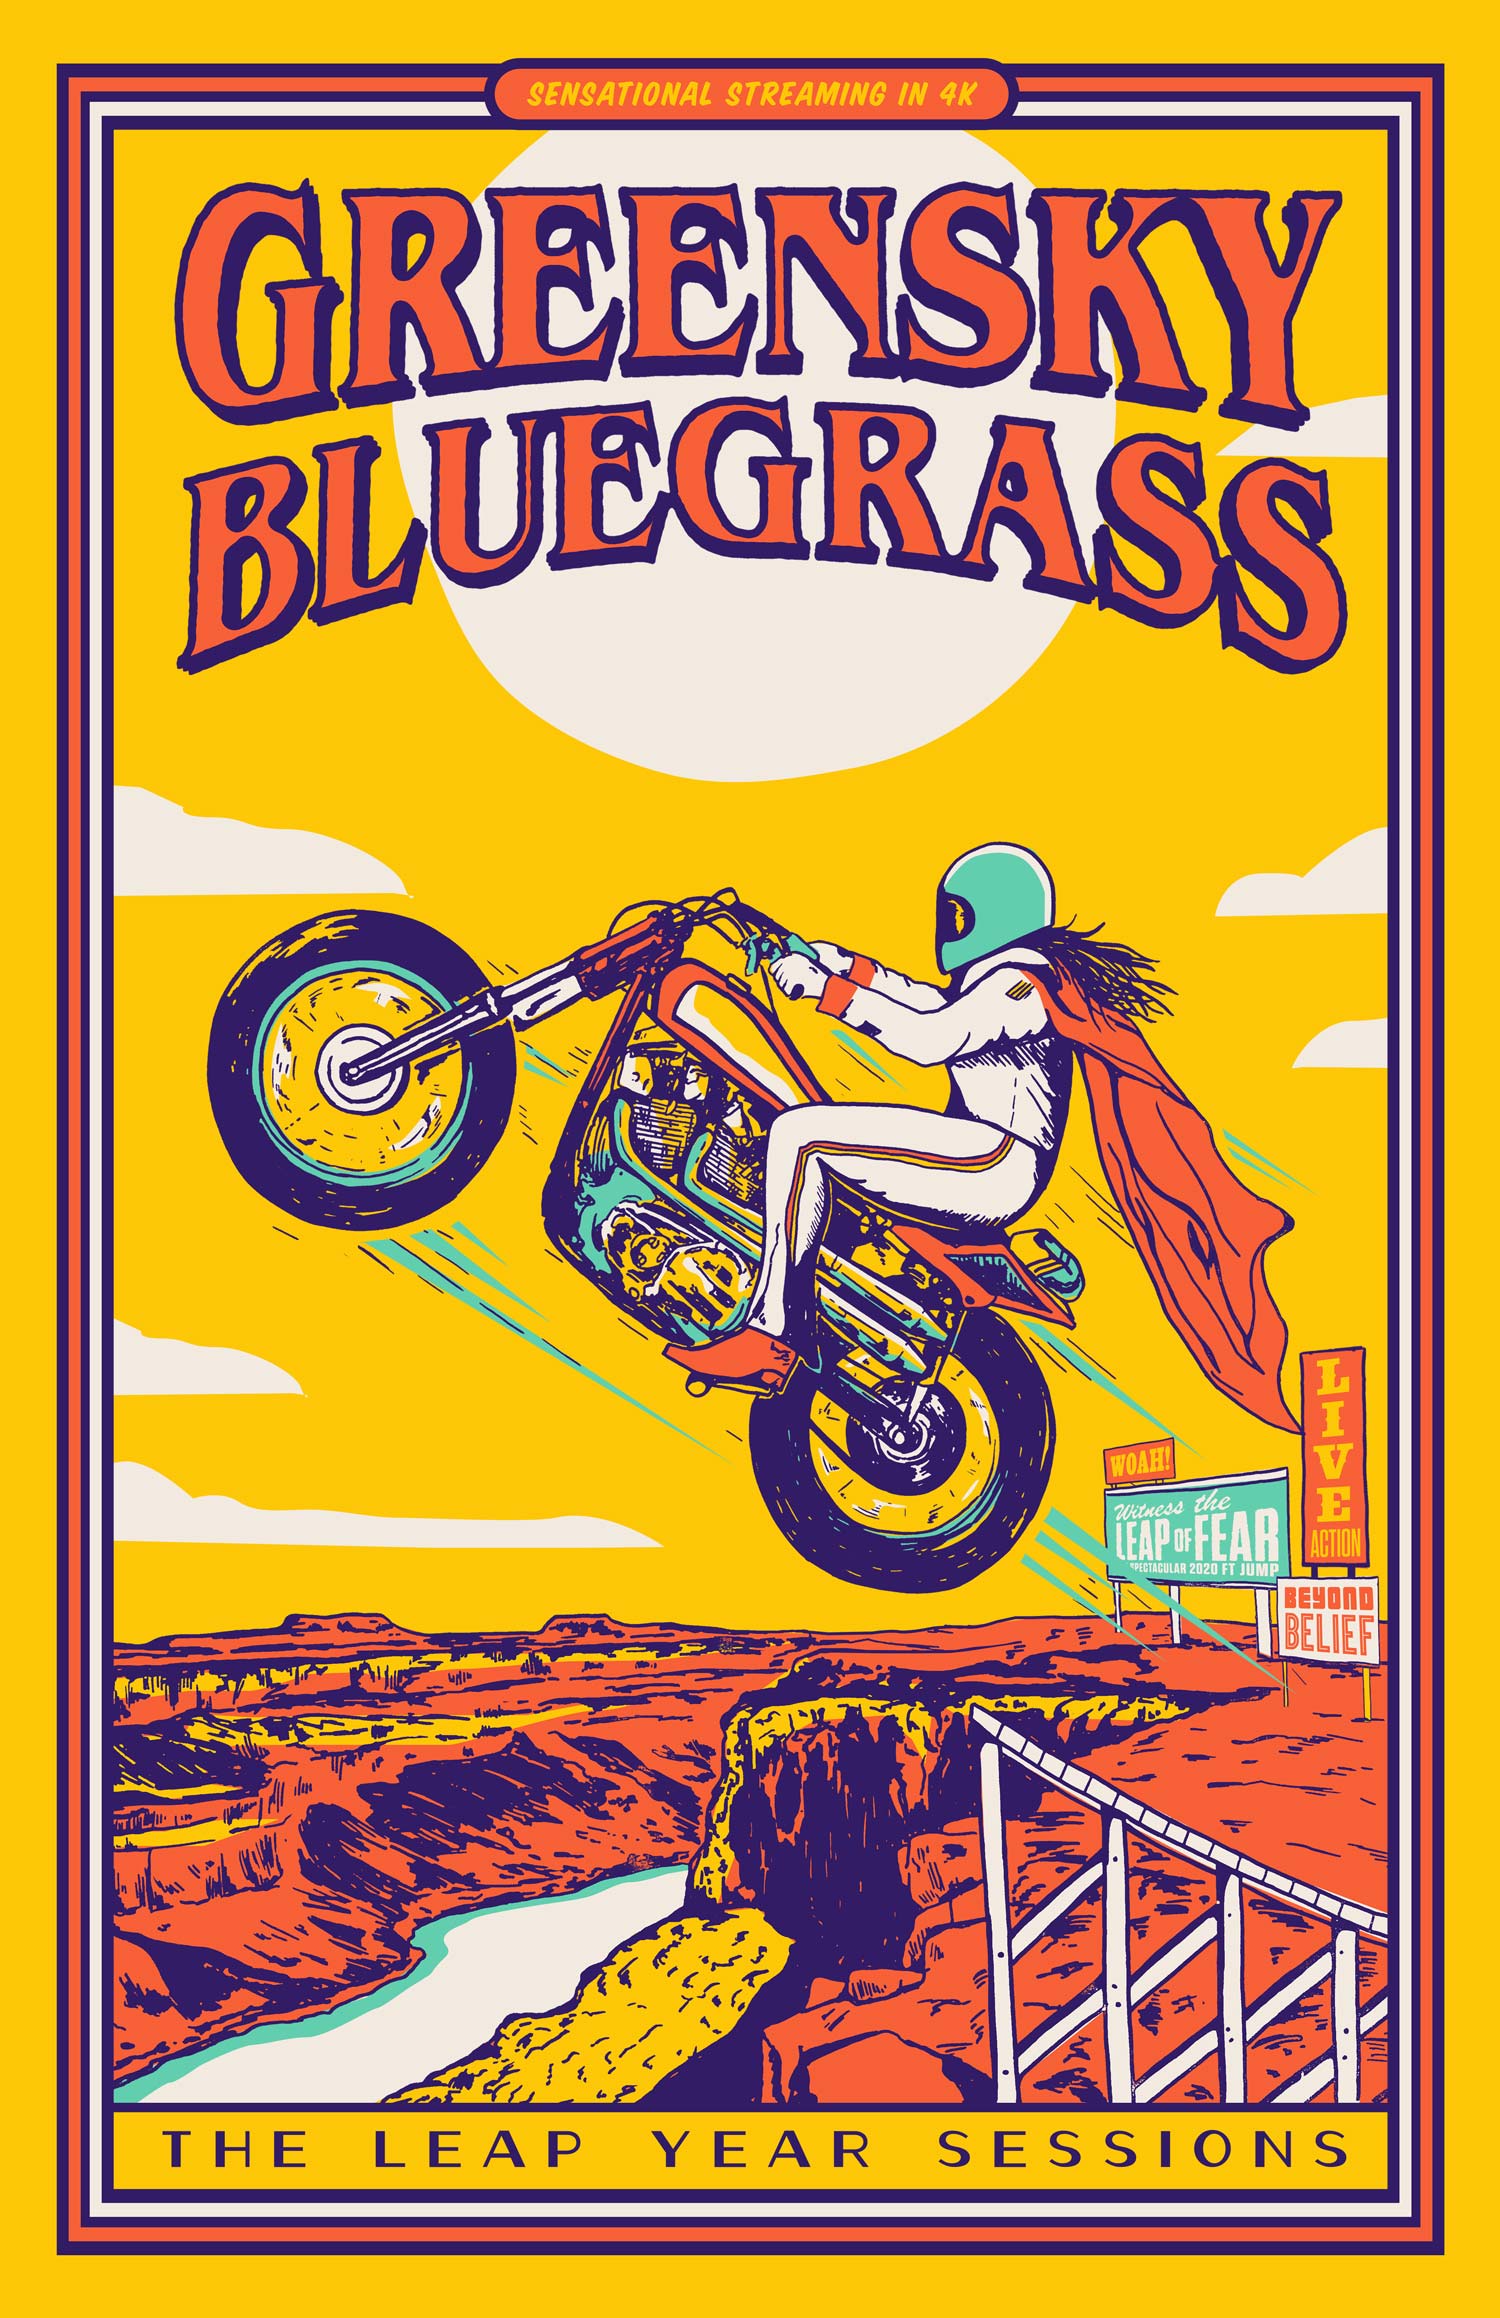 Greensky Bluegrass Streams 2nd Virtual Tour Performance on 8/14